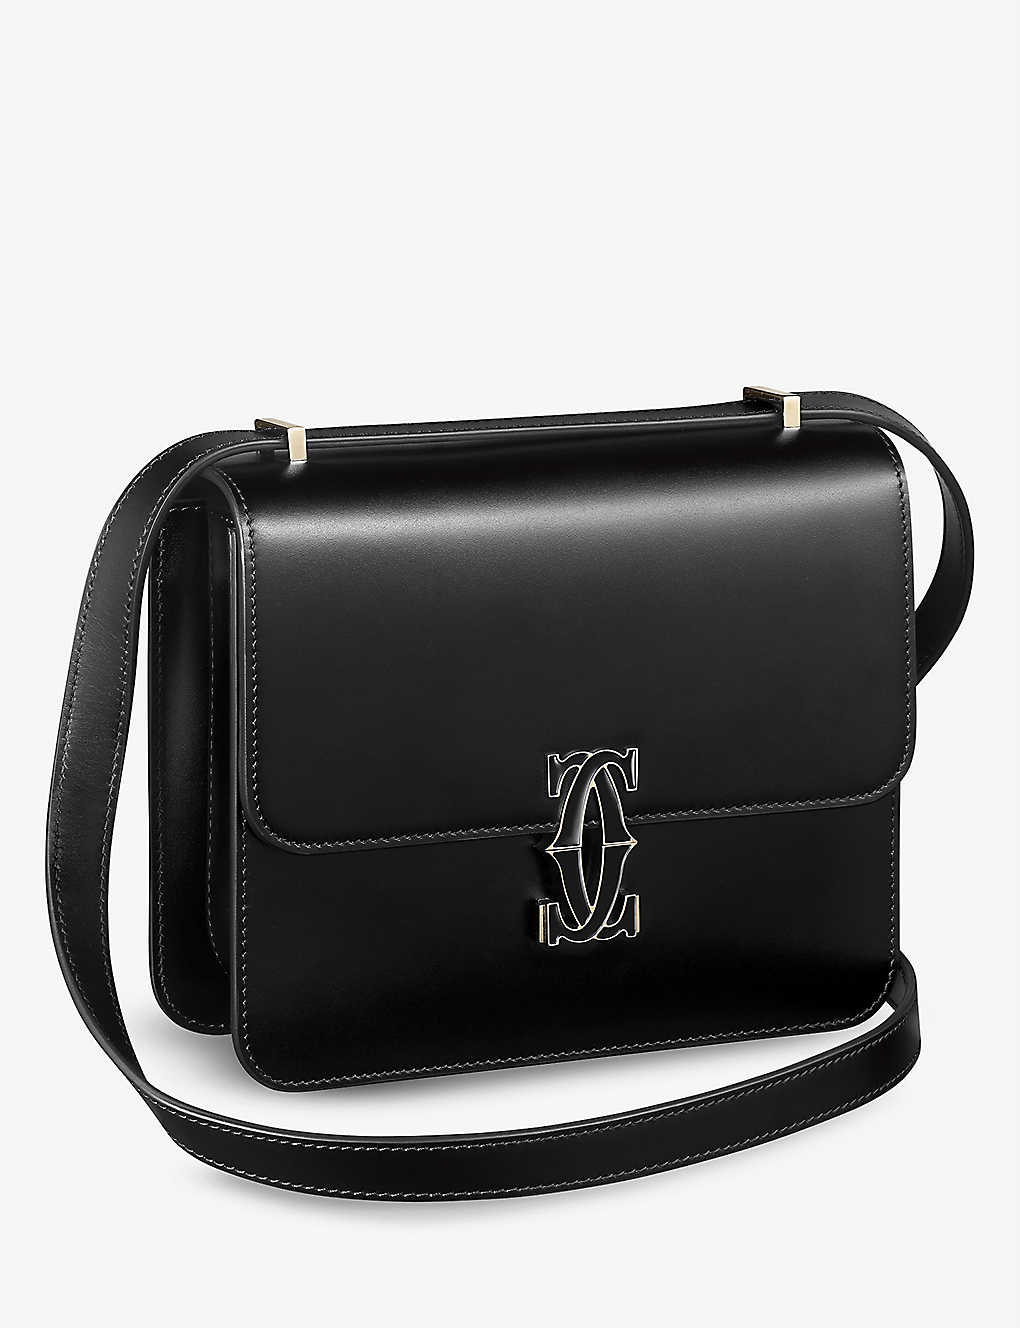 Cartier Womens Black Double C De Mini Leather Cross-body Bag